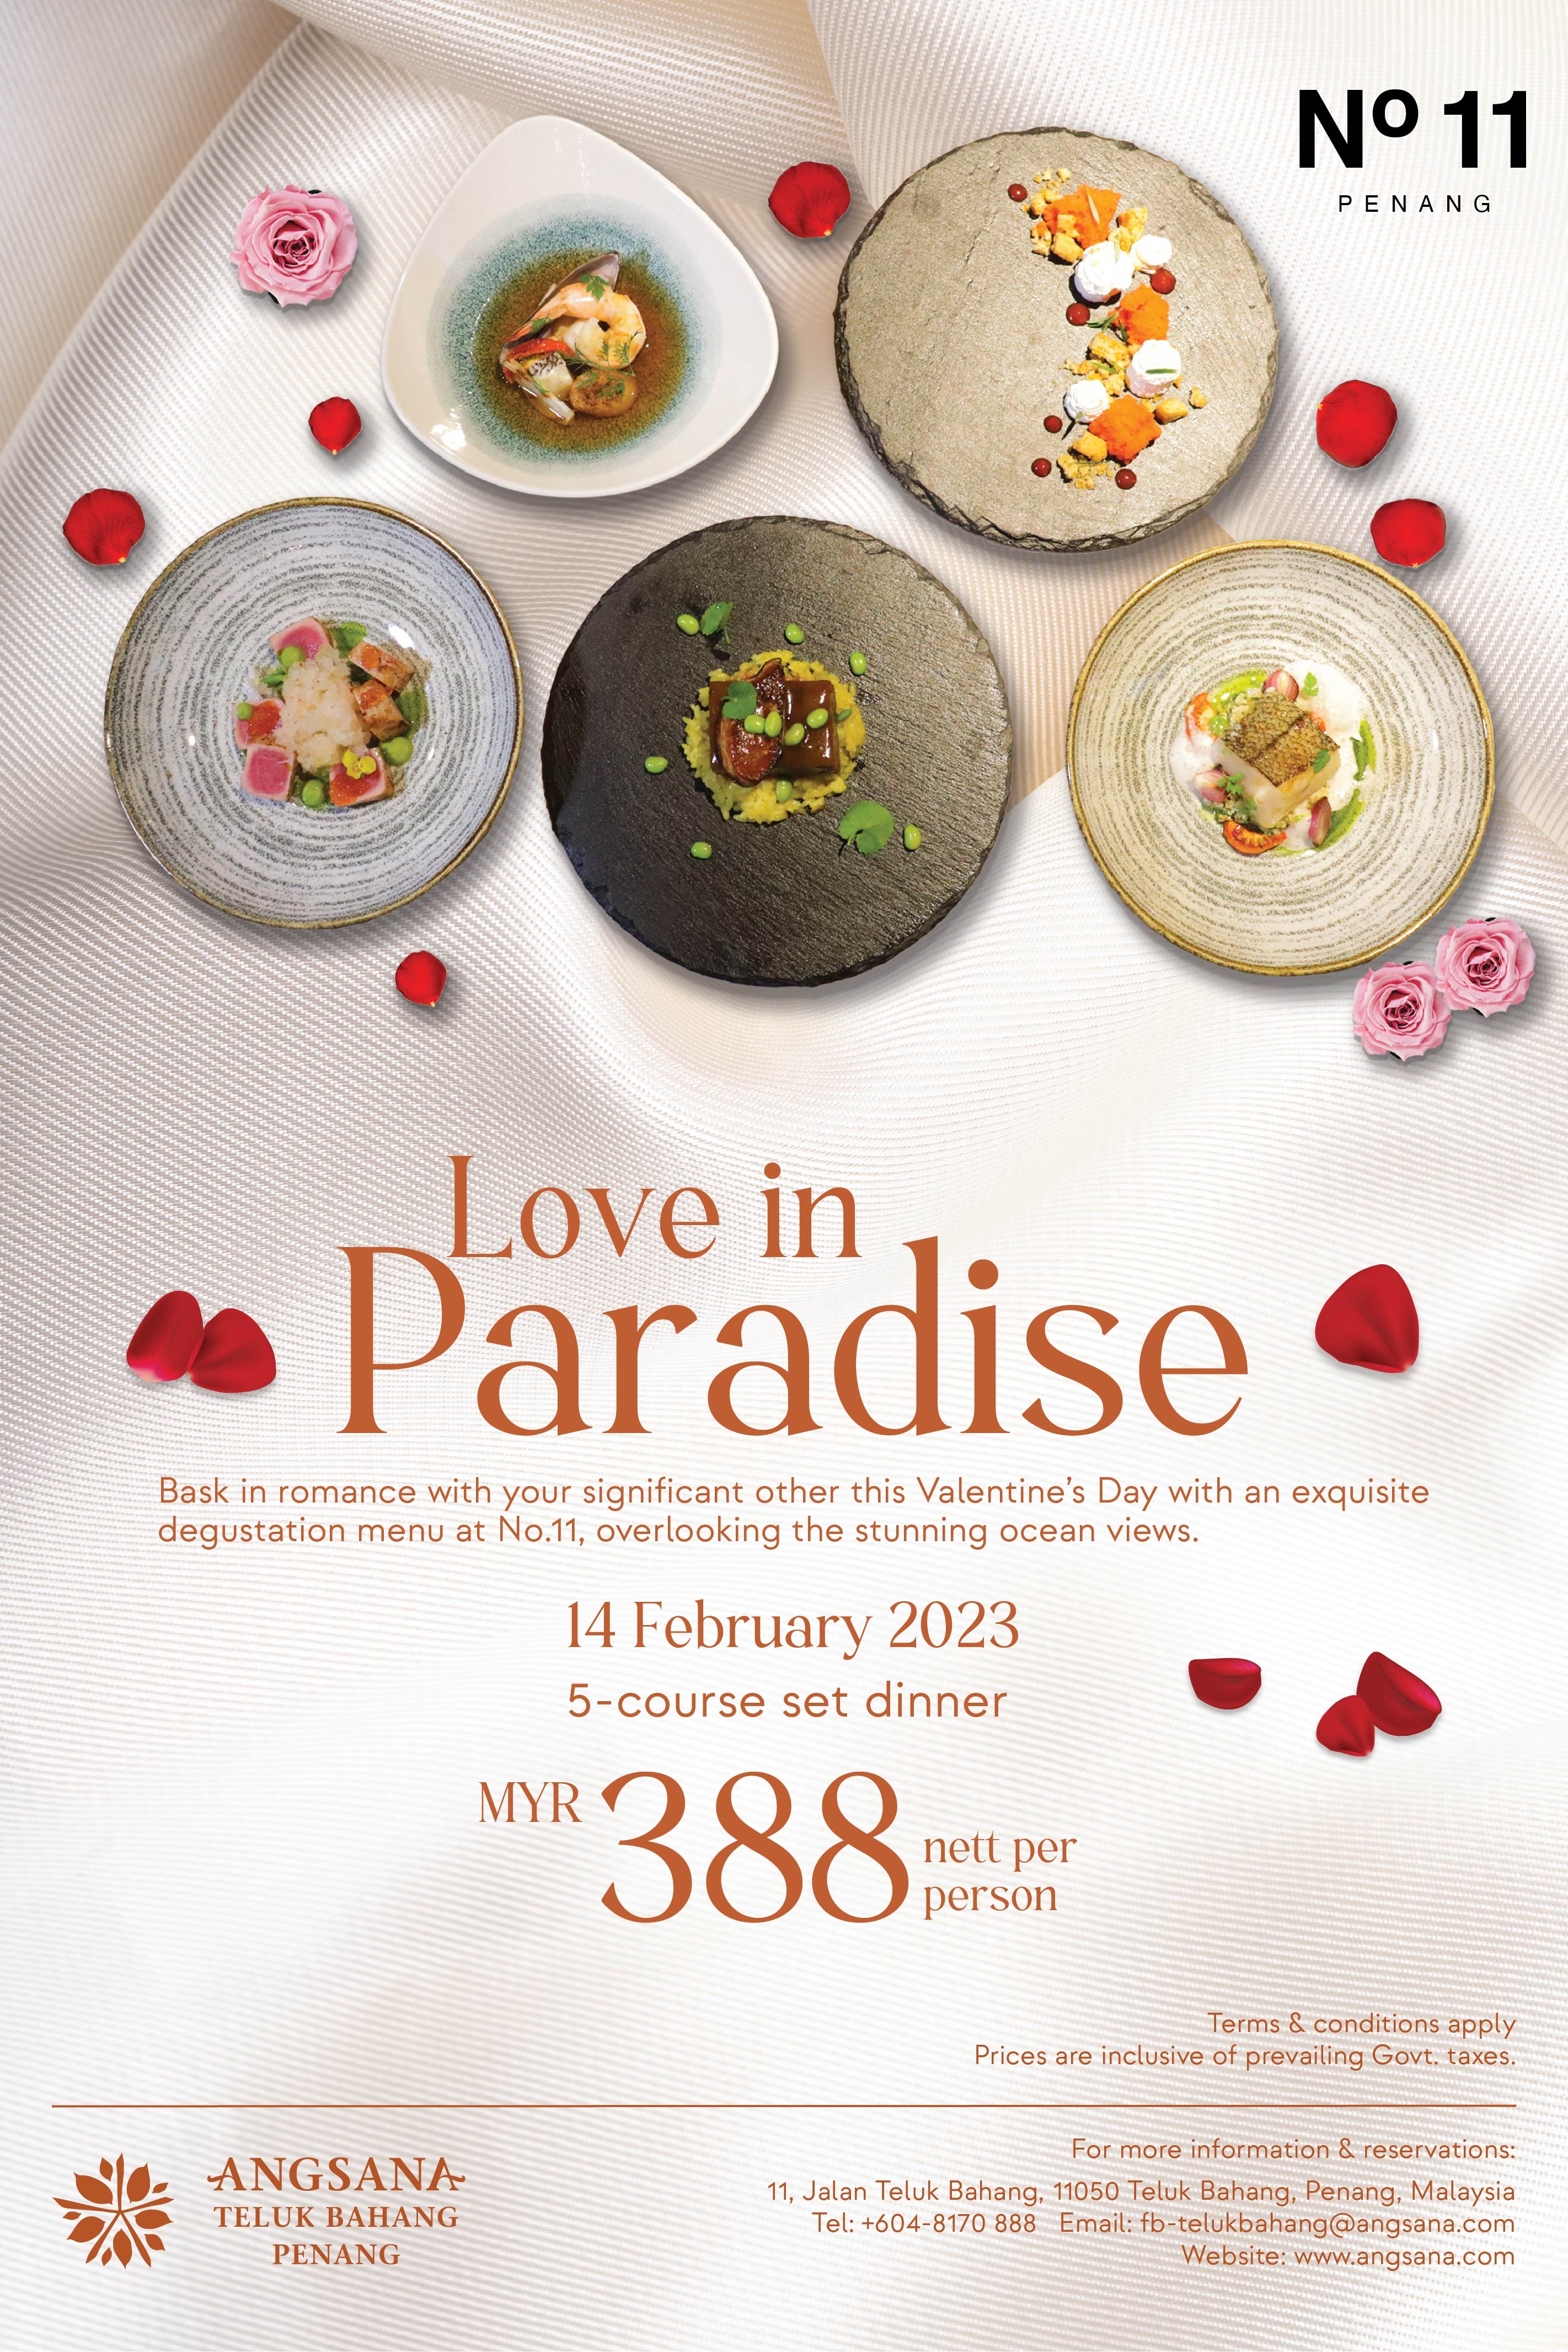 Love in Paradise by Angsana Teluk Bahang